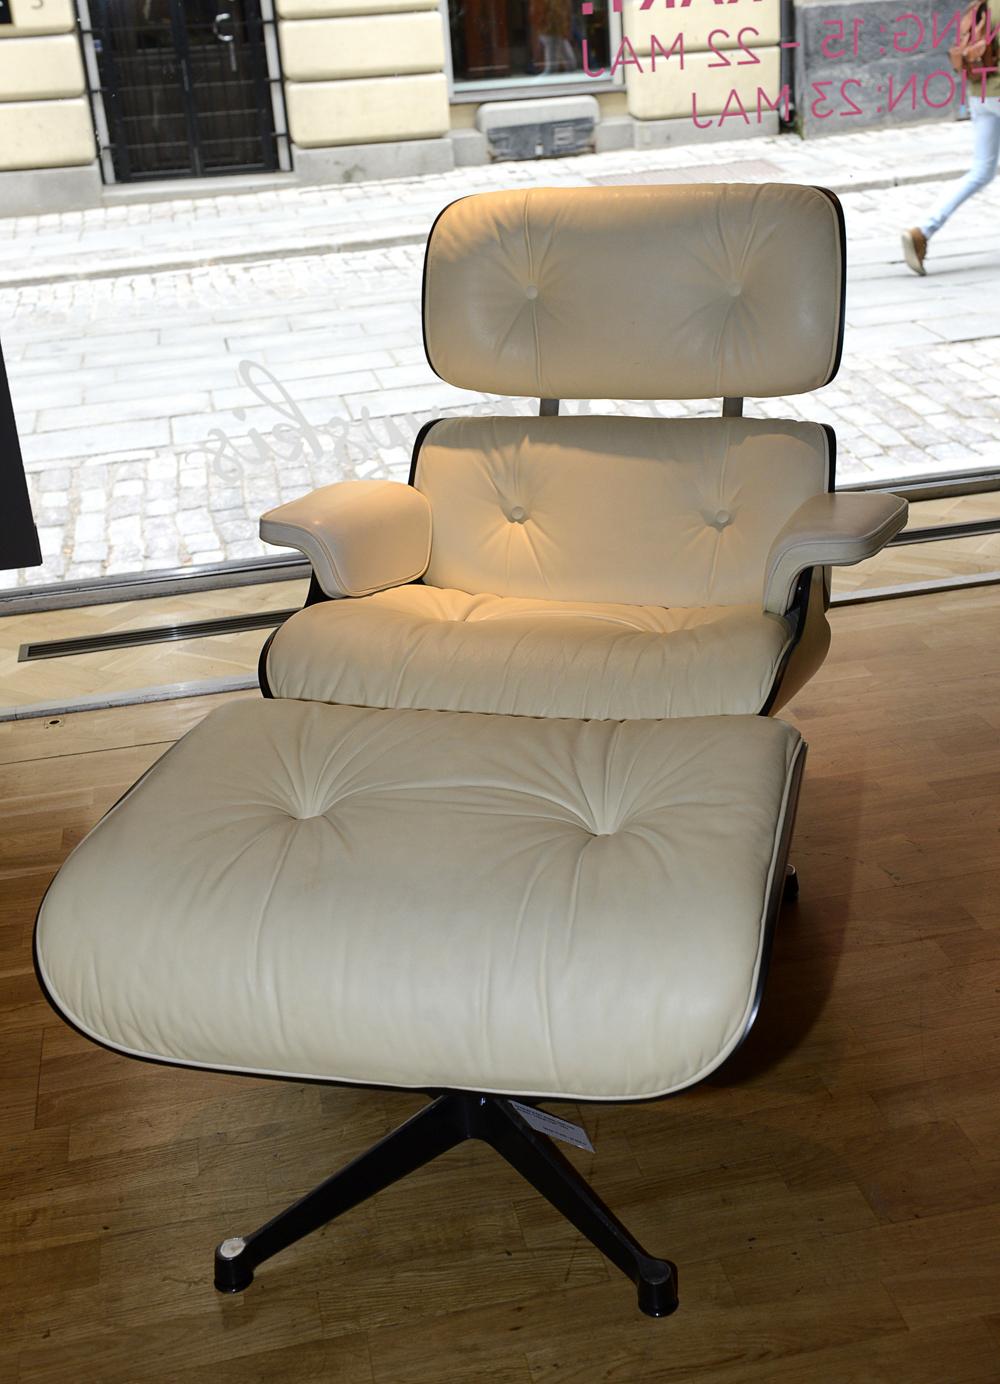 arry Scheins gamla fåtölj "Lounge Chair", designad av Charles och Ray Eames. Utropspris: 15 000–20 000 kronor.